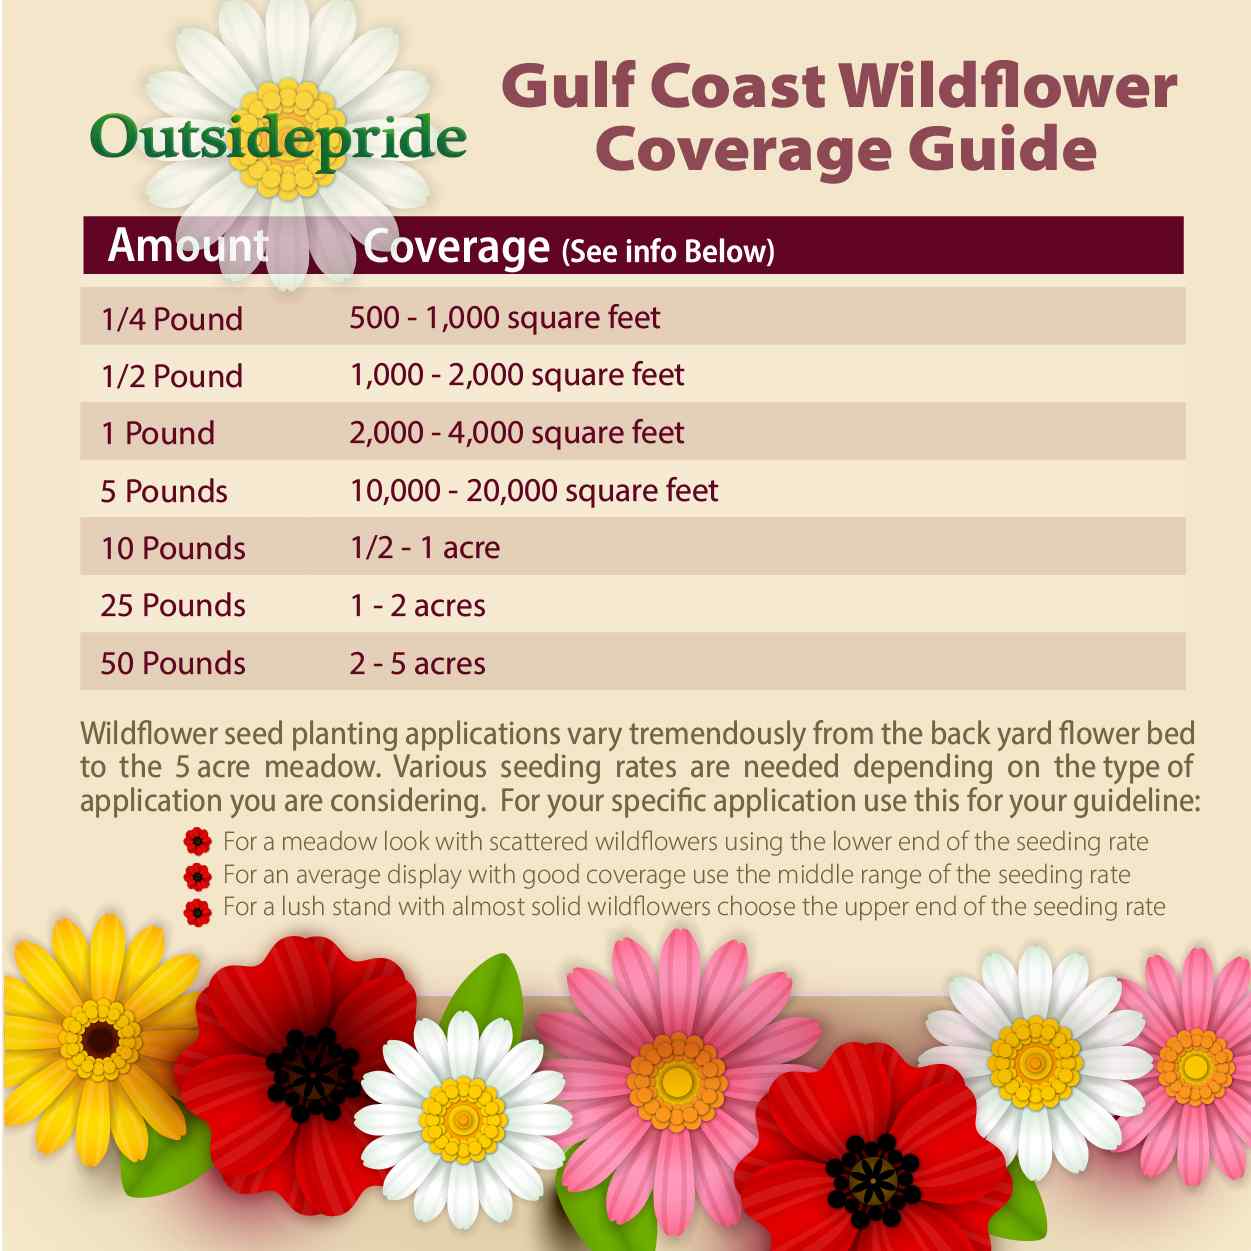 Gulf Coast Wildflowers Seed Rates